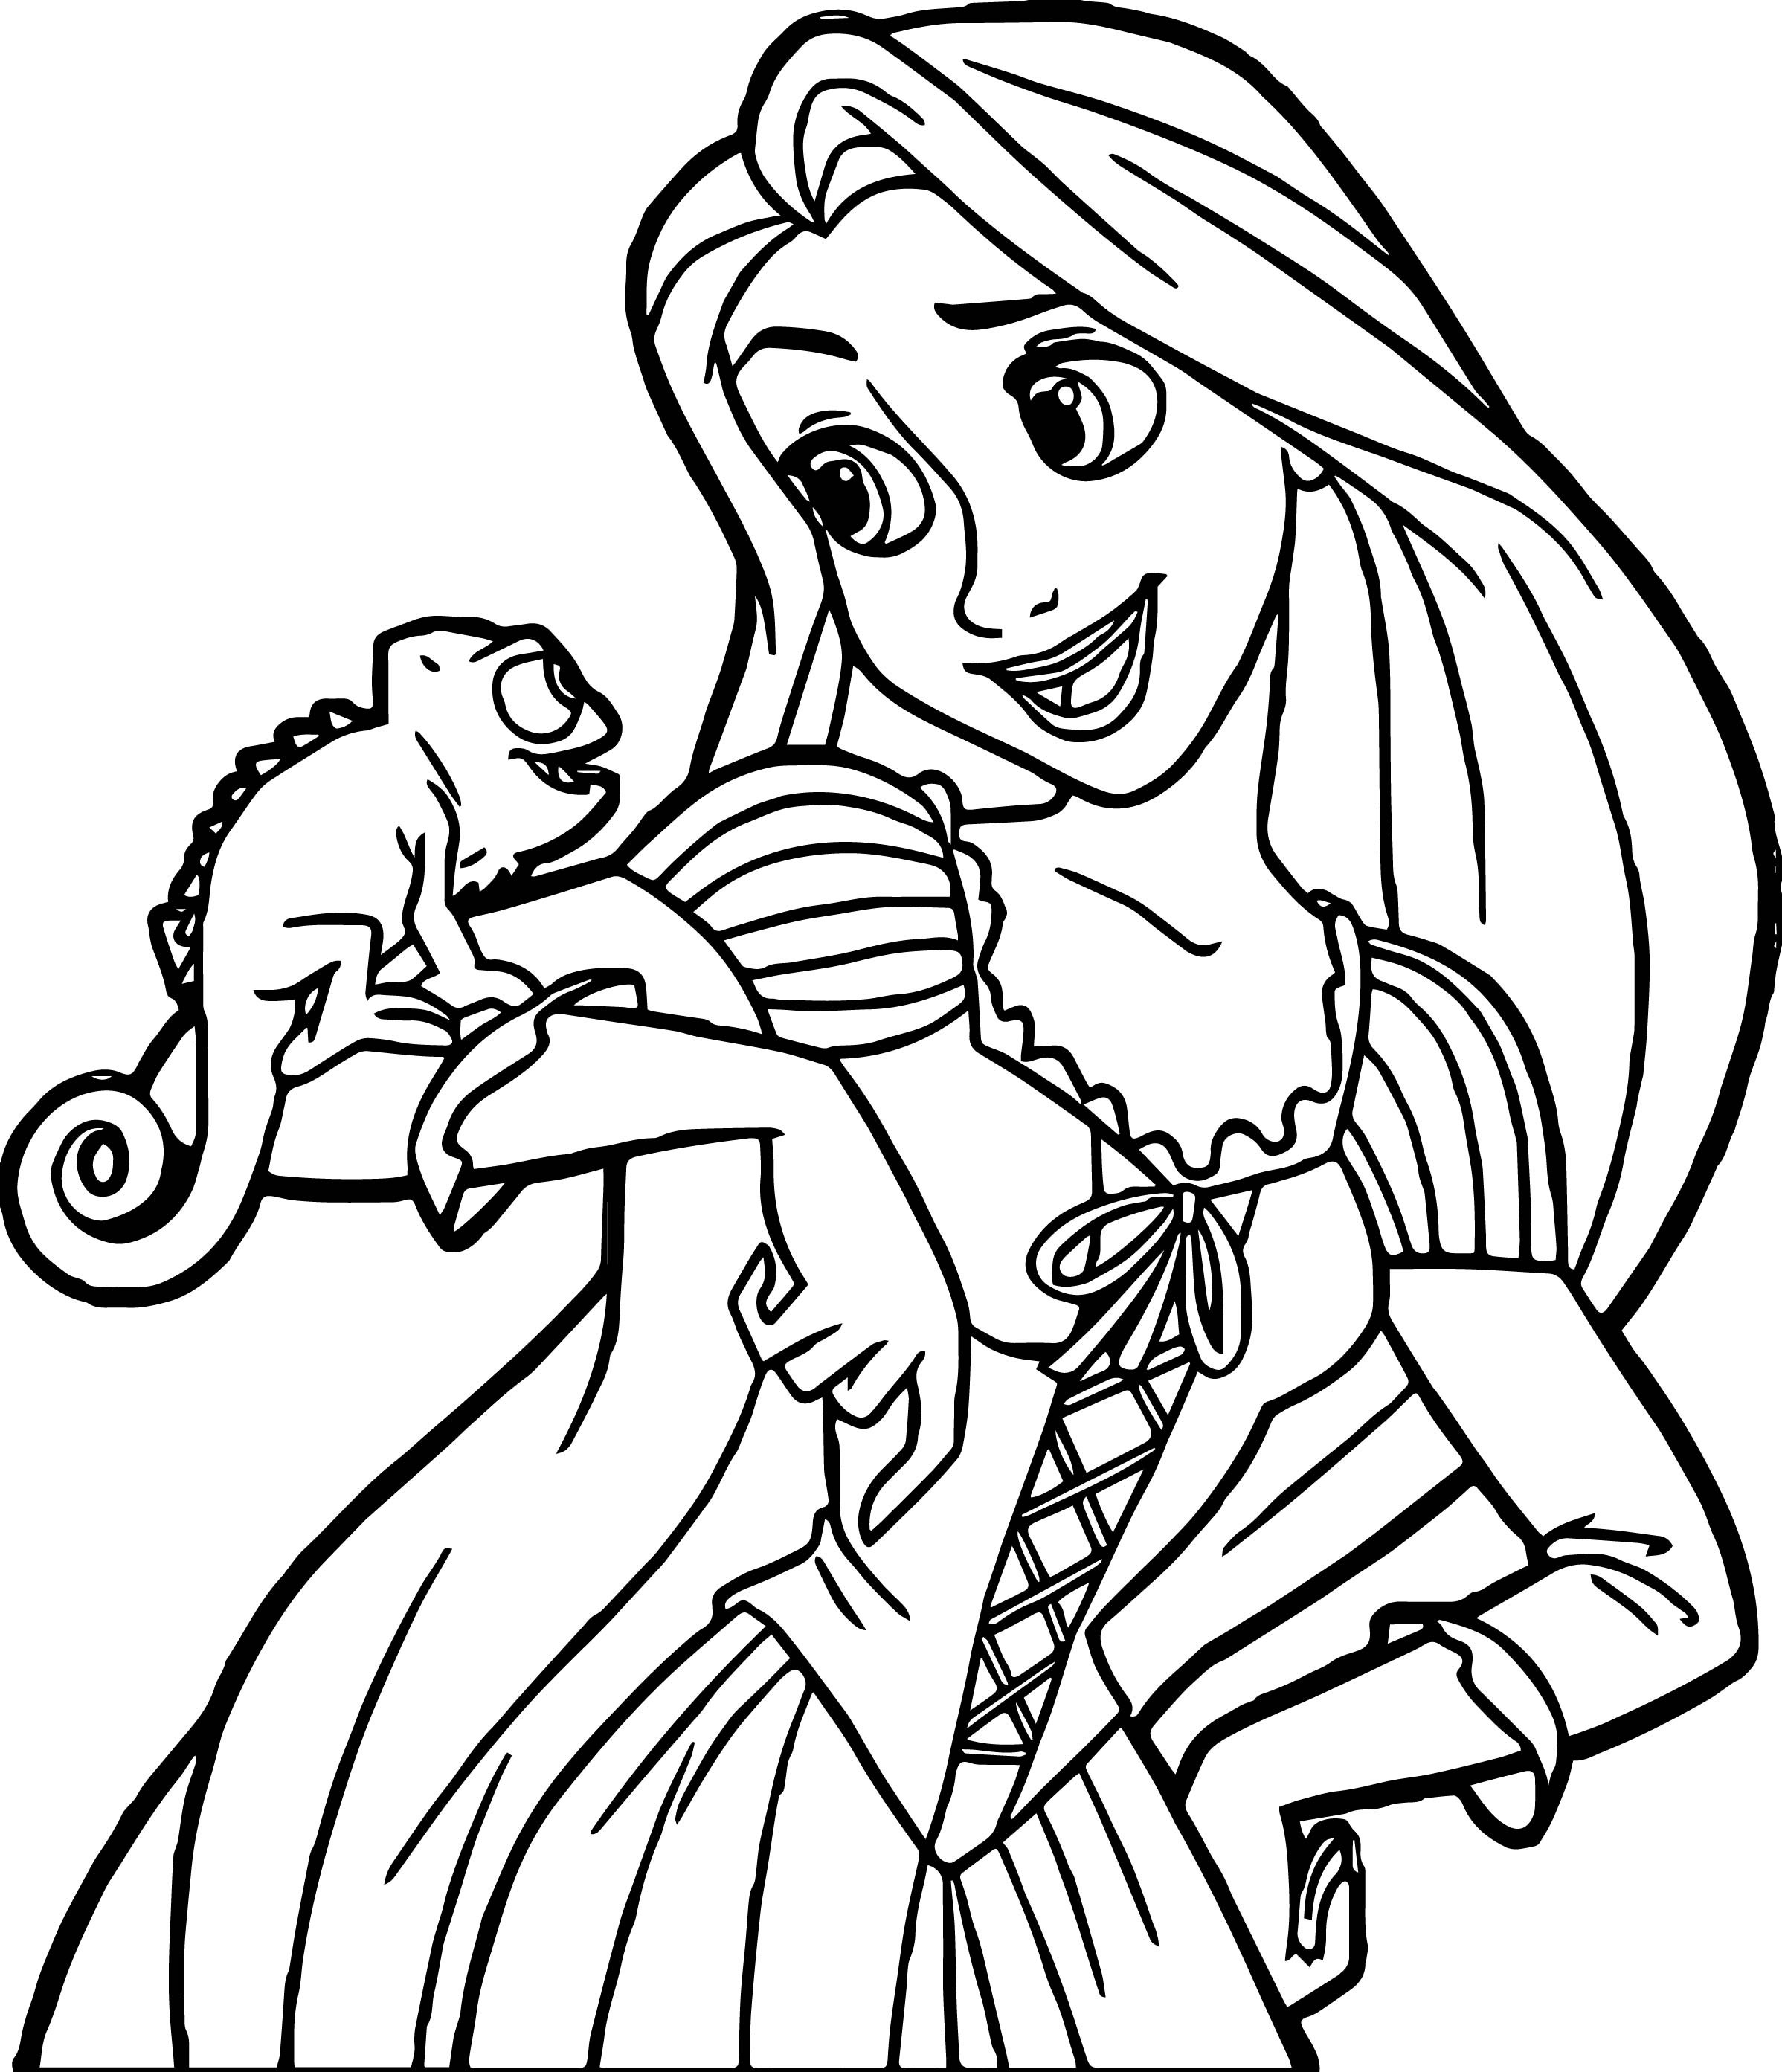 Disney Princess Tangled Coloring Pages at GetColorings.com | Free ...